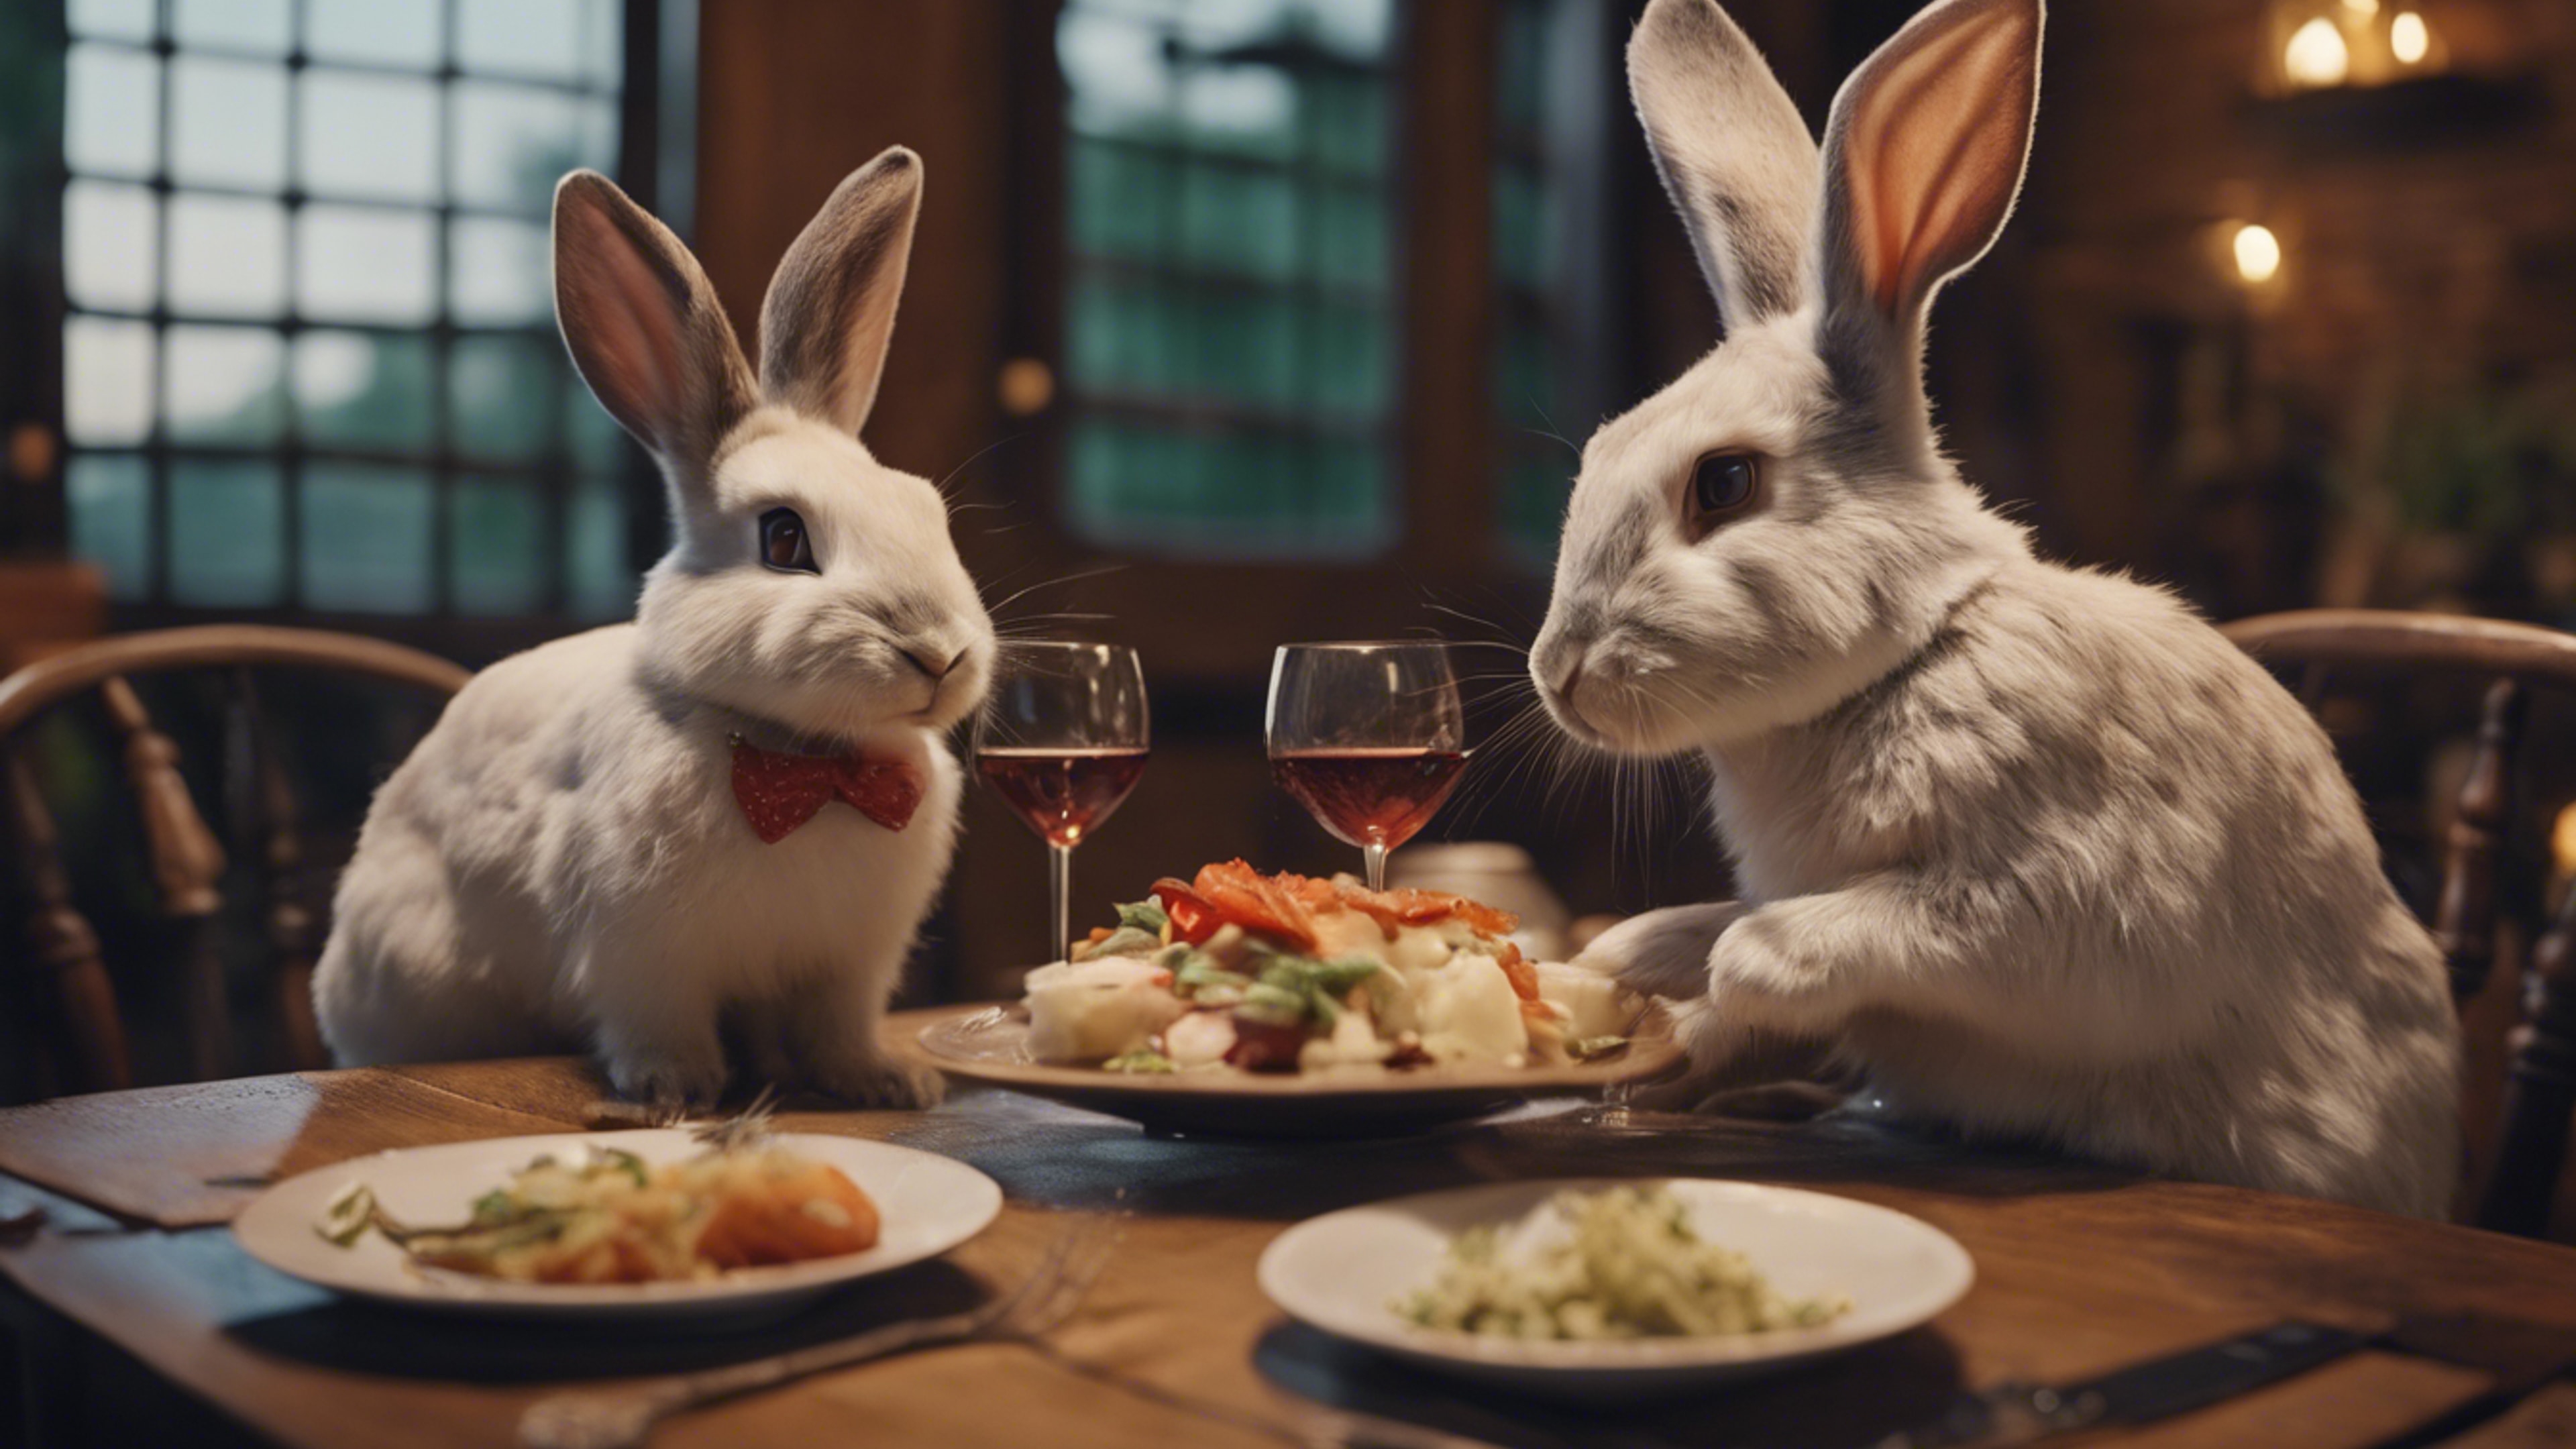 A rabbit couple enjoying a romantic dinner in a quaint, rustic setting.壁紙[f4a7594170784844a7a3]